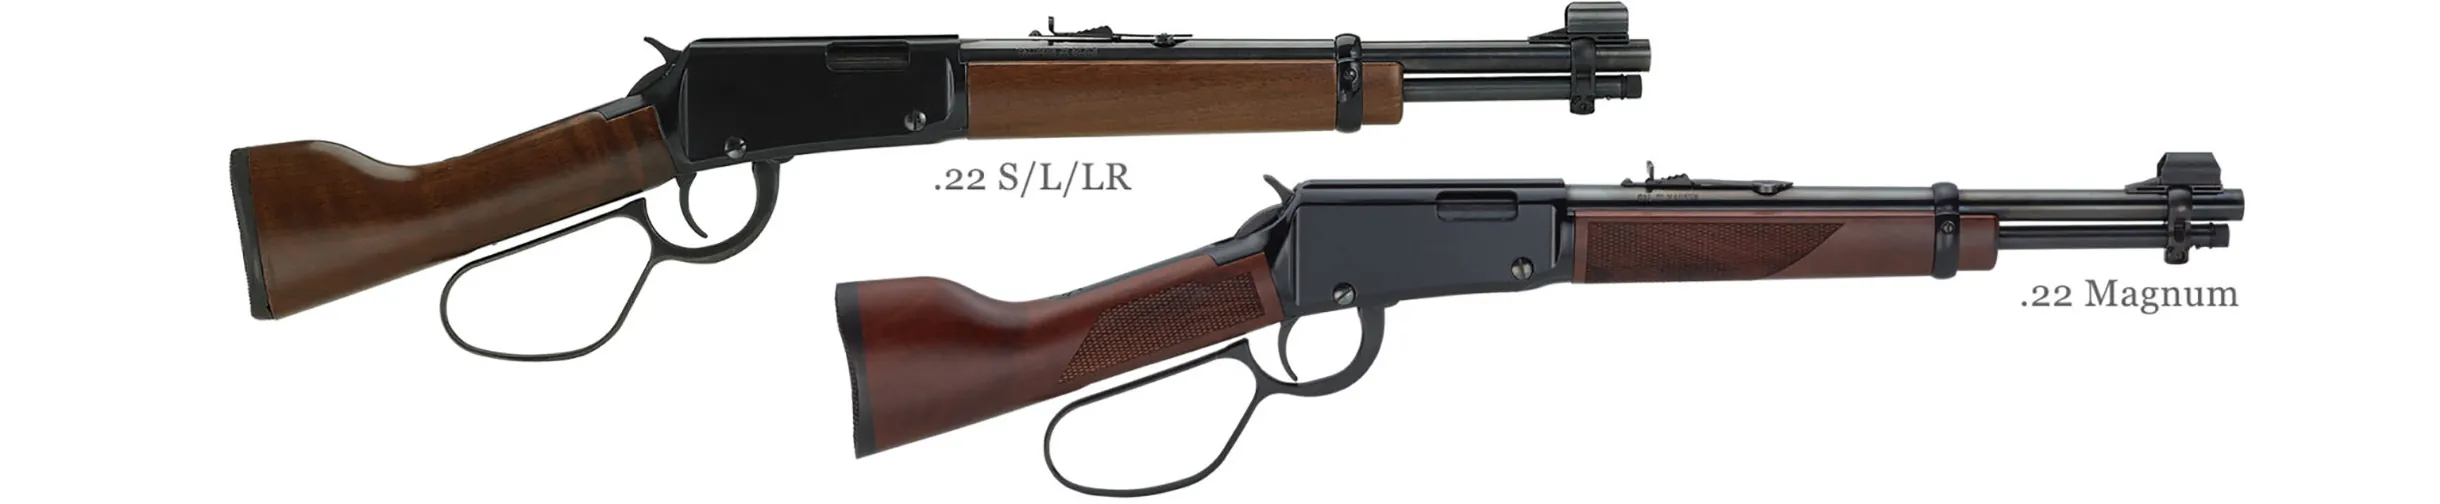 Buy Henry Mare's Leg Lever Action Pistol 22 Magnum